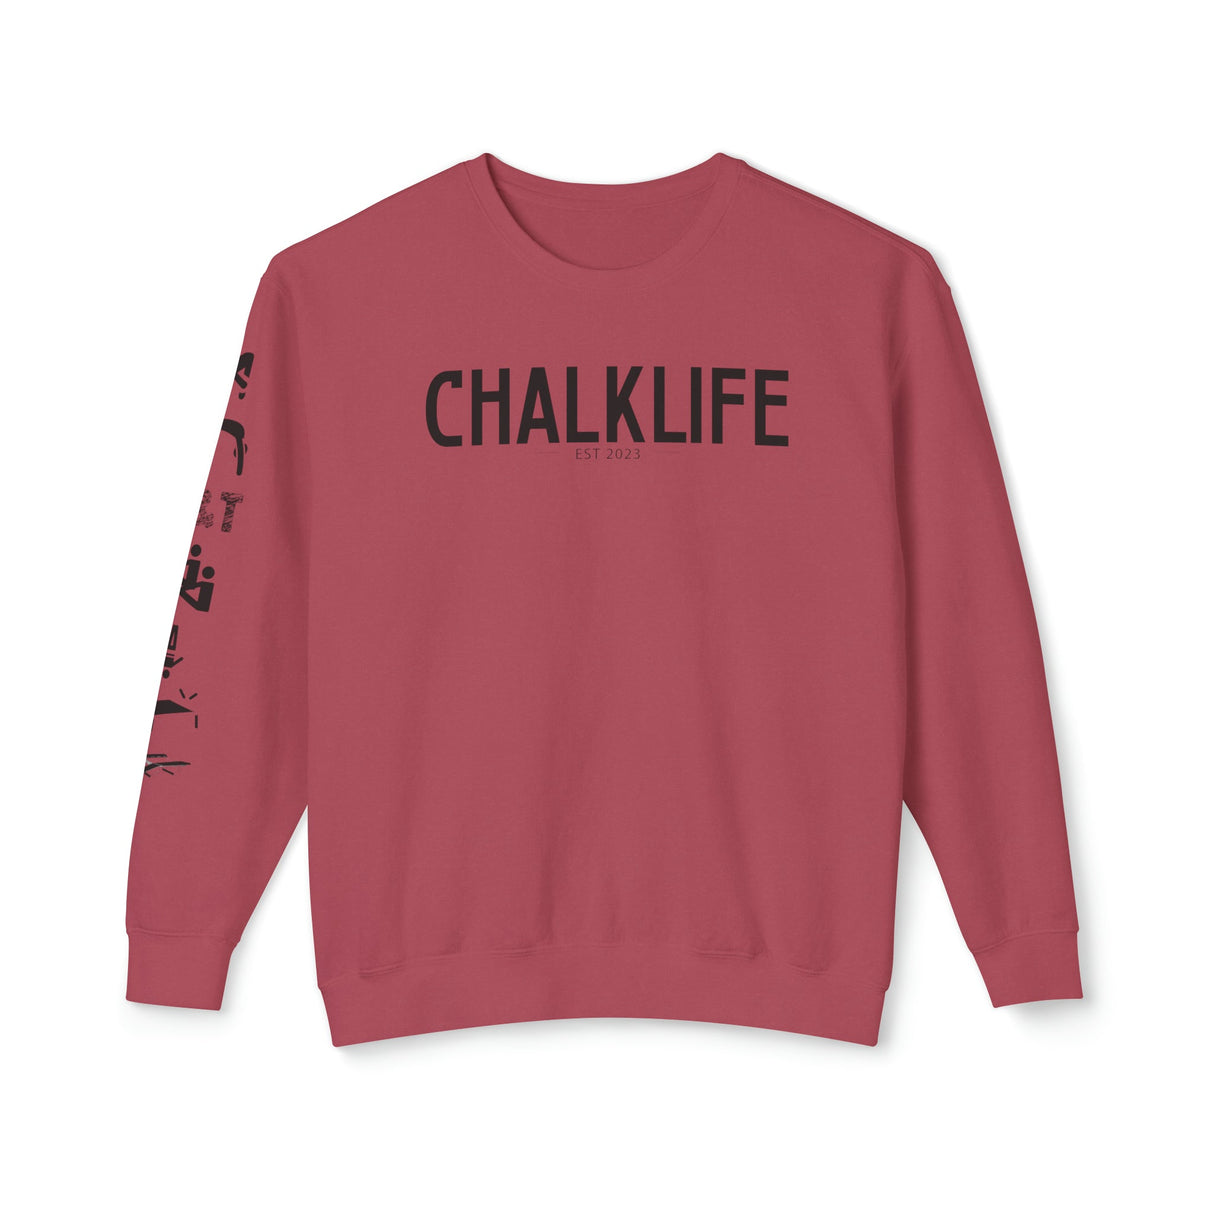 Chalklife - Trampoline & Tumbling Events Unisex Lightweight Crewneck Sweatshirt - Chalklife, LLC